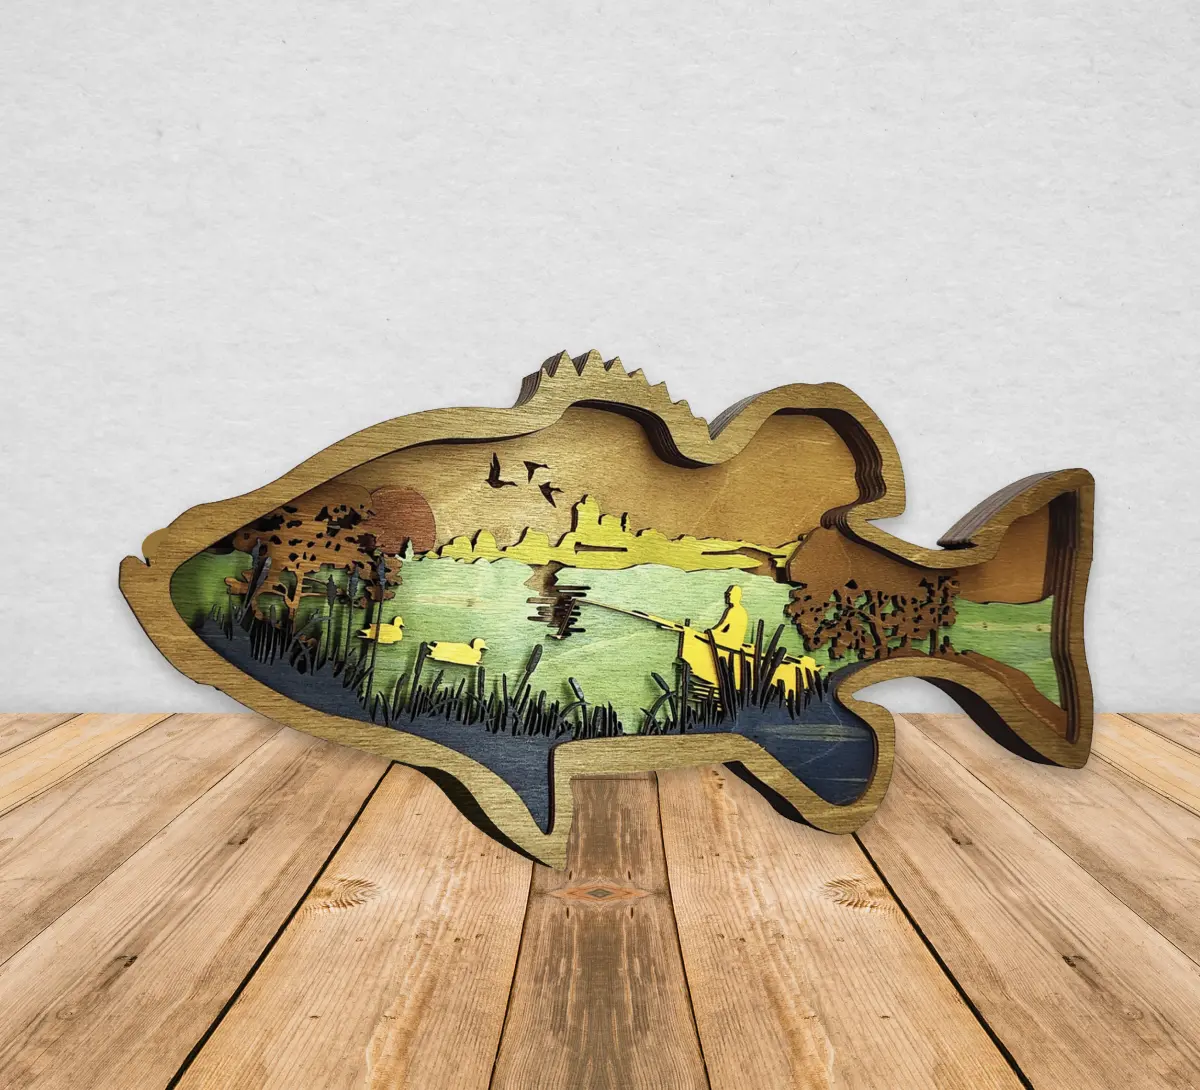 Fishing on a Lake 3-D Interior Design Wood Engraving Angel Tree Designs